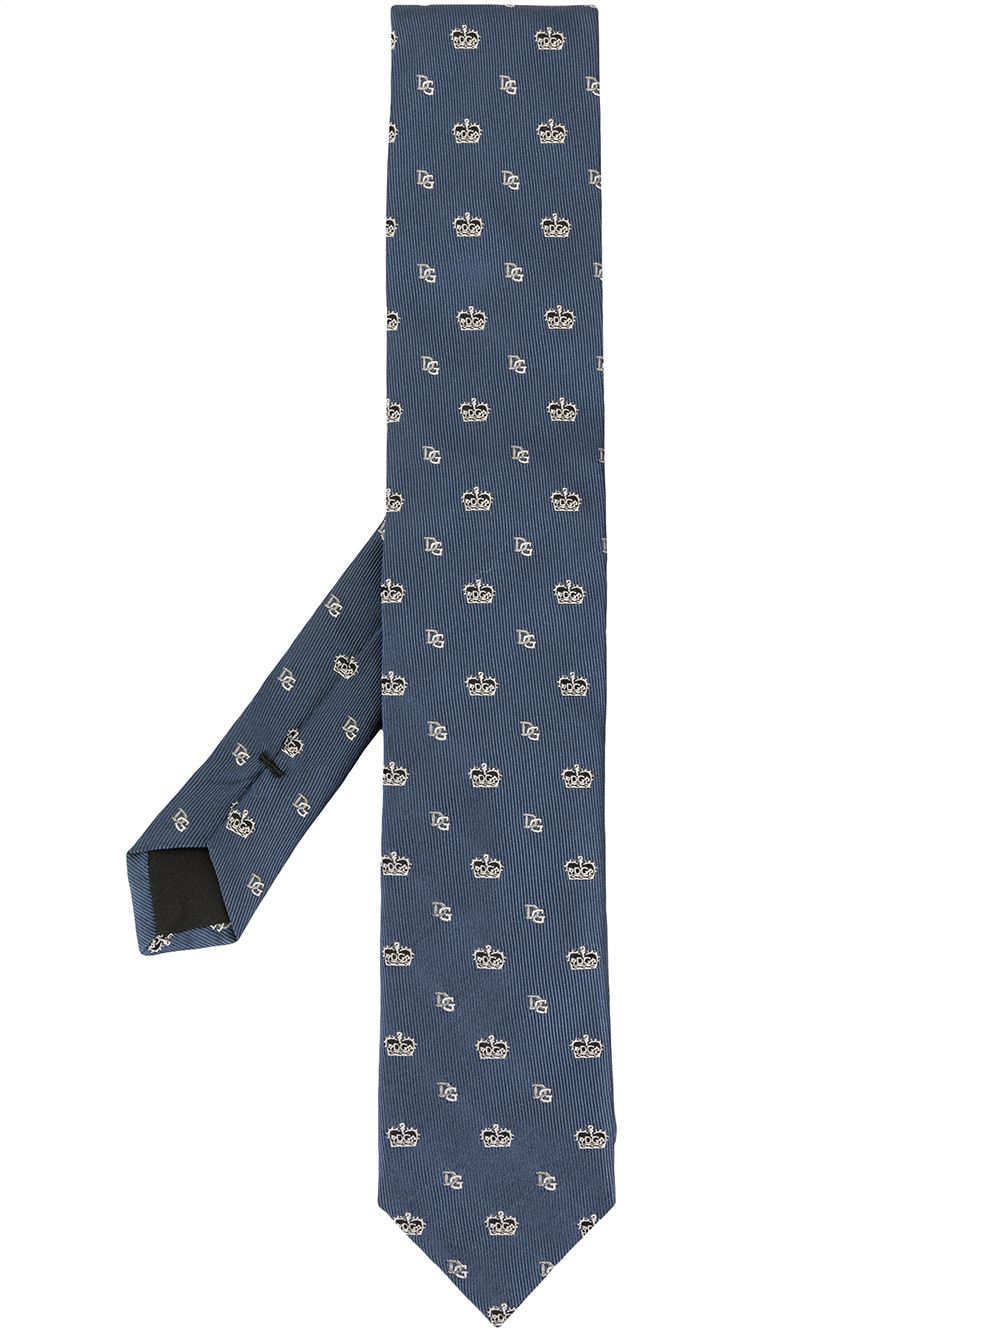 фото Dolce & gabbana галстук с монограммой